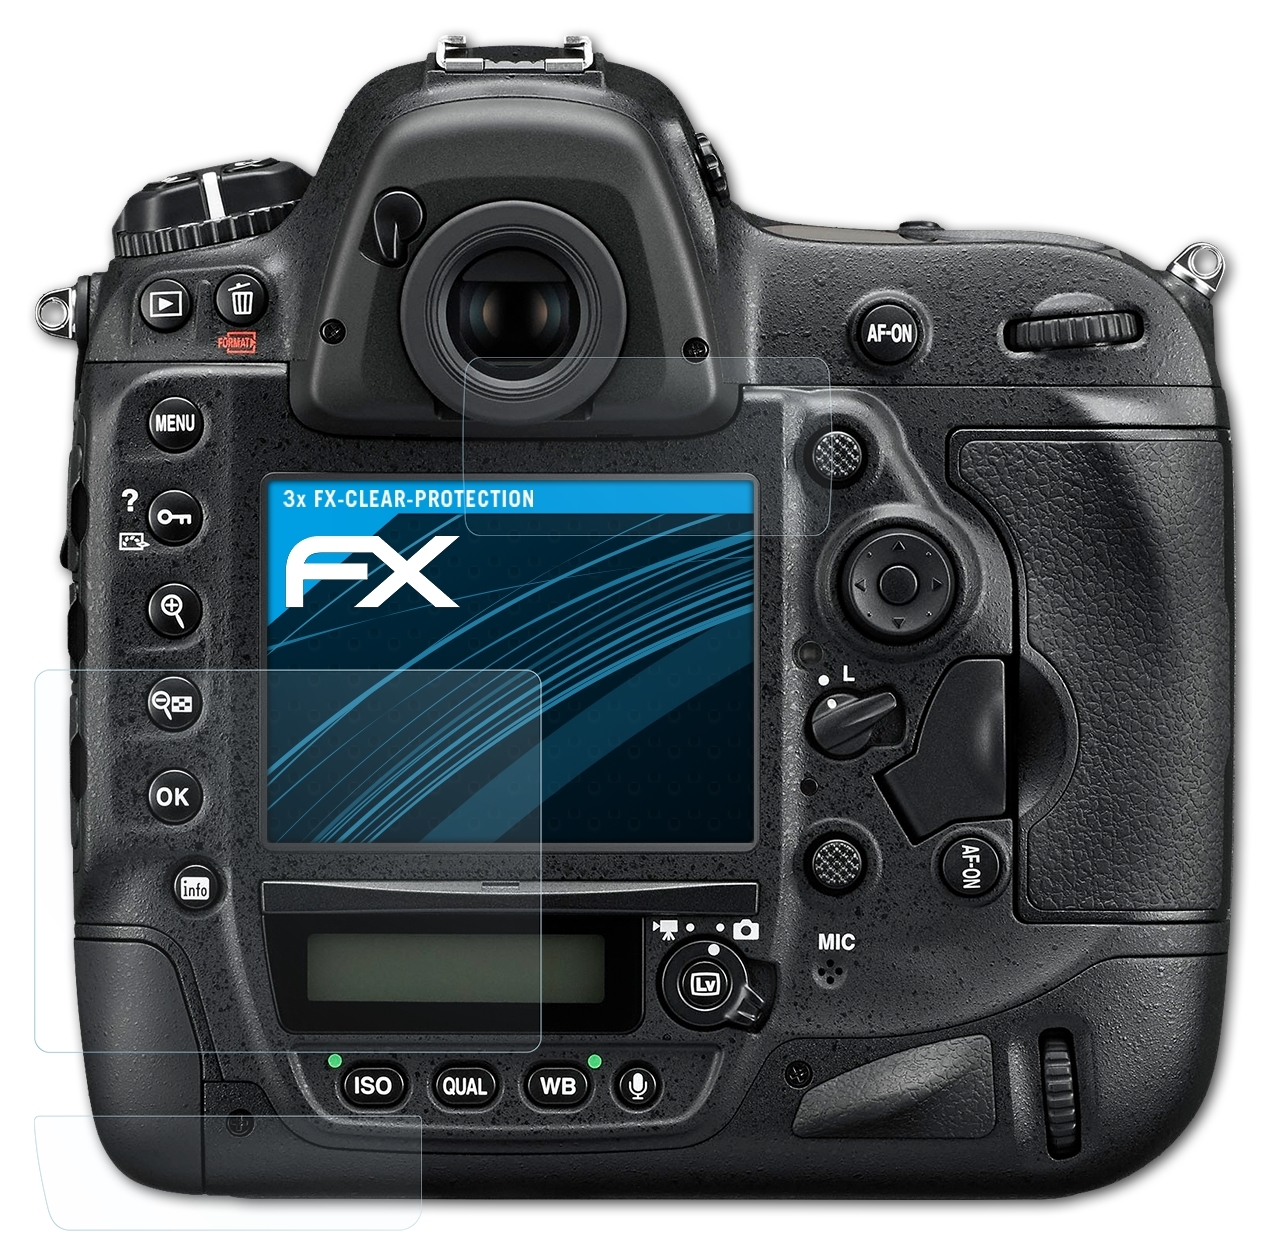 3x D4s) FX-Clear Displayschutz(für ATFOLIX Nikon